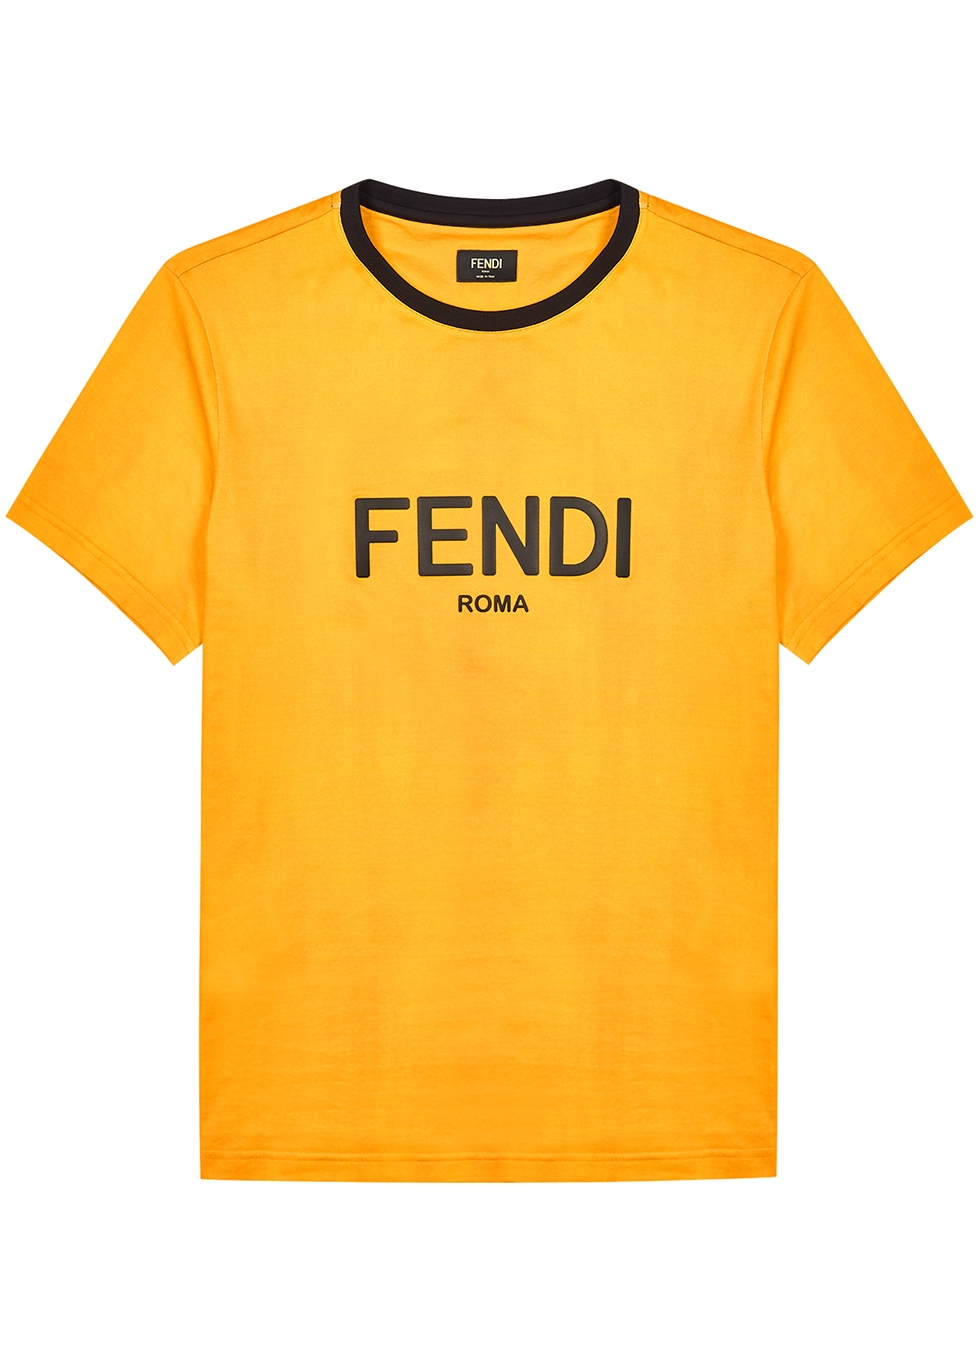 fendi yellow t shirt